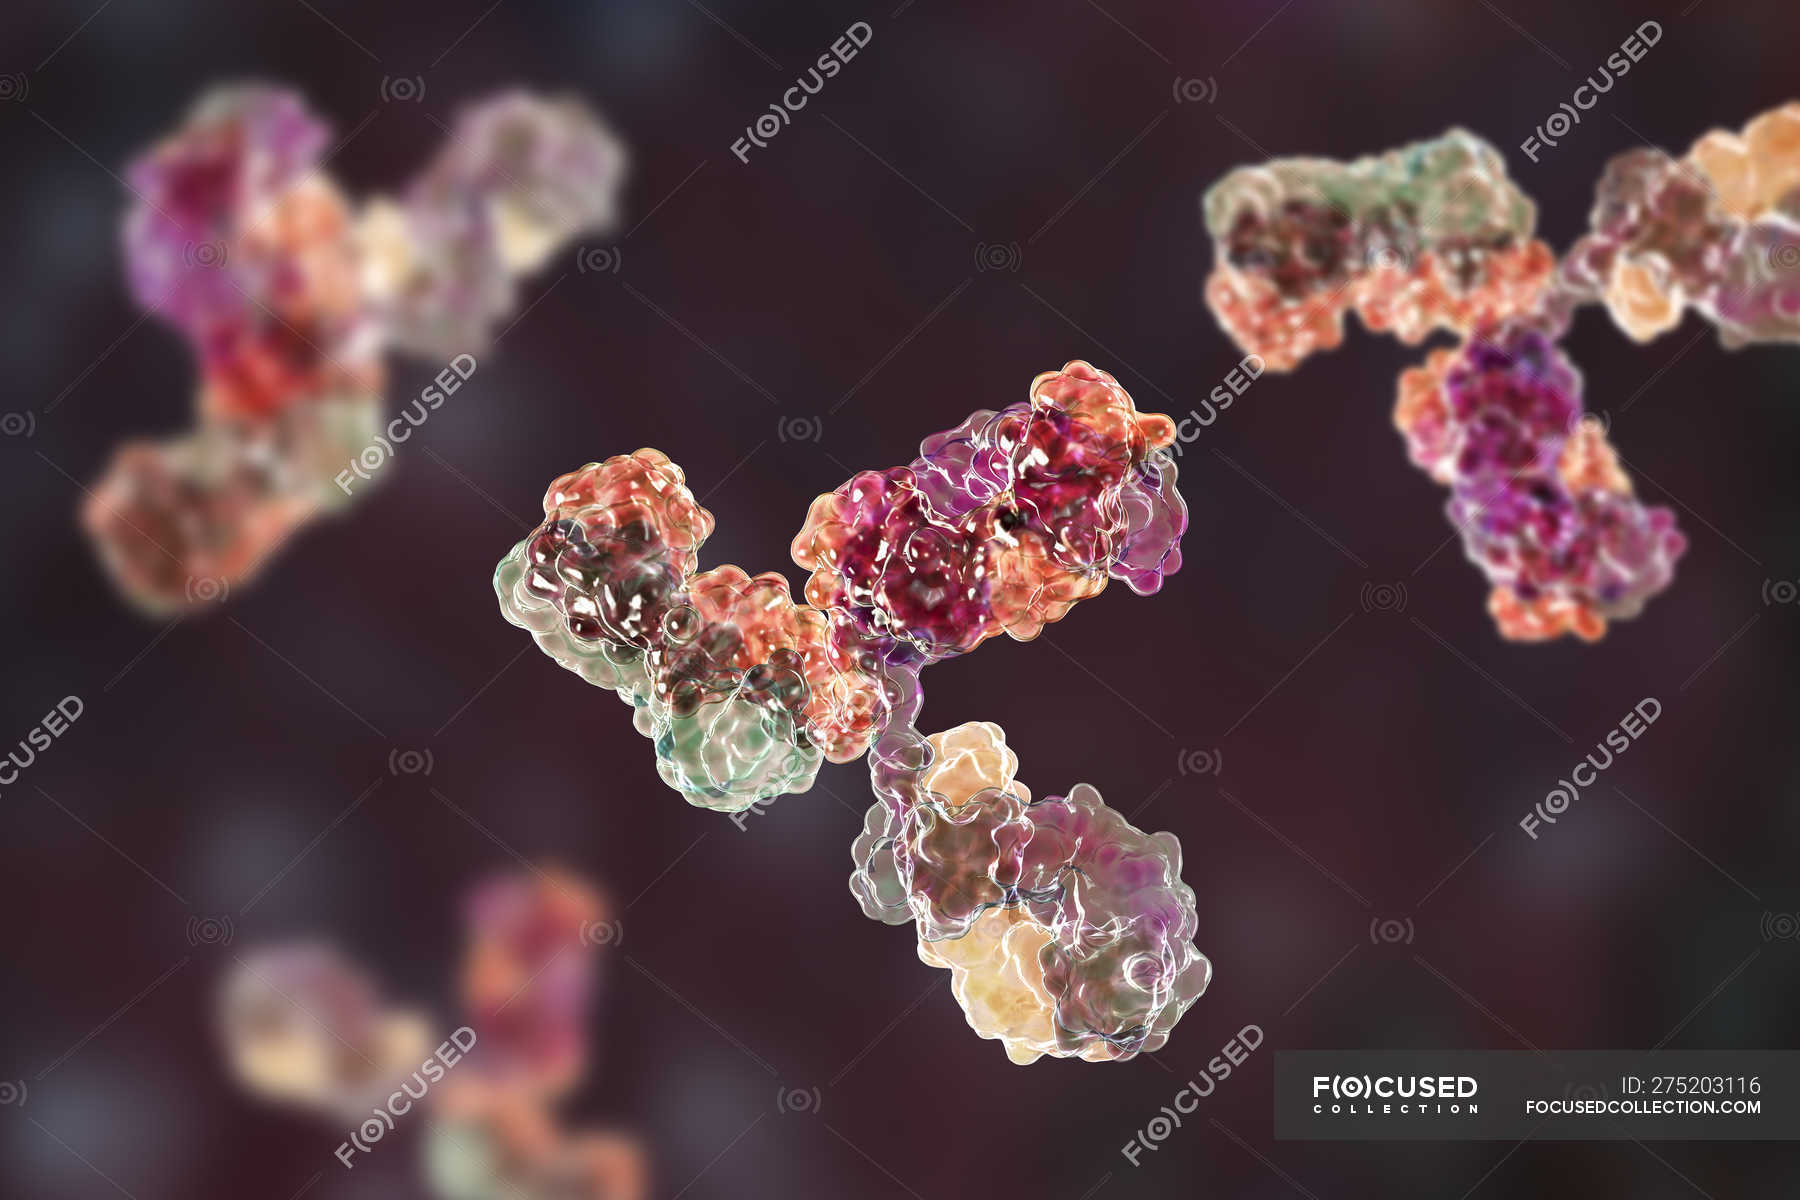 Digital molecular model of secondary structure of immunoglobulin G  antibodies. — three dimensional, y shaped - Stock Photo | #275203116